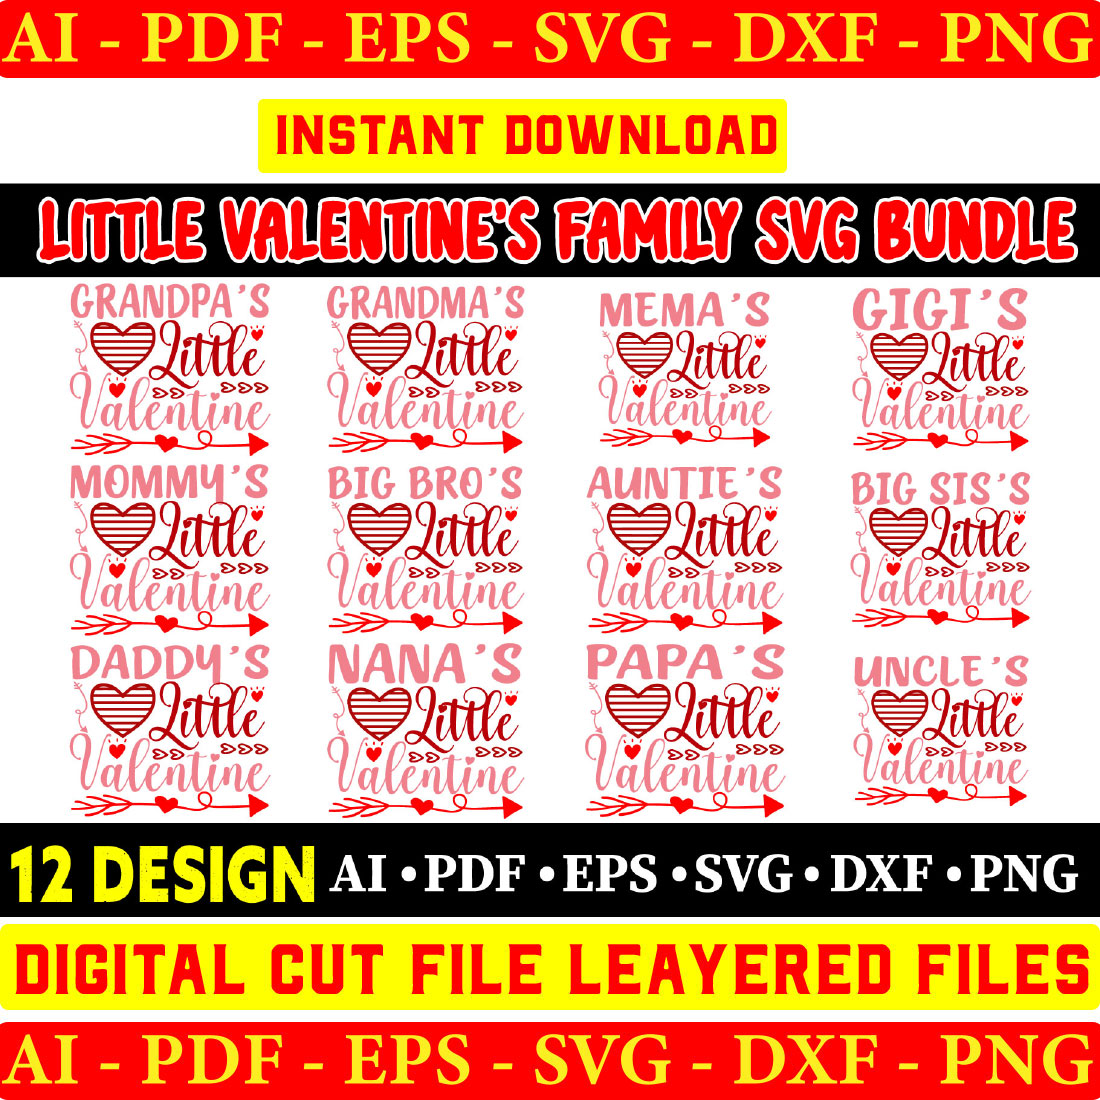 Little Valentine's Day Family SVG Bundle Vol-04 cover image.